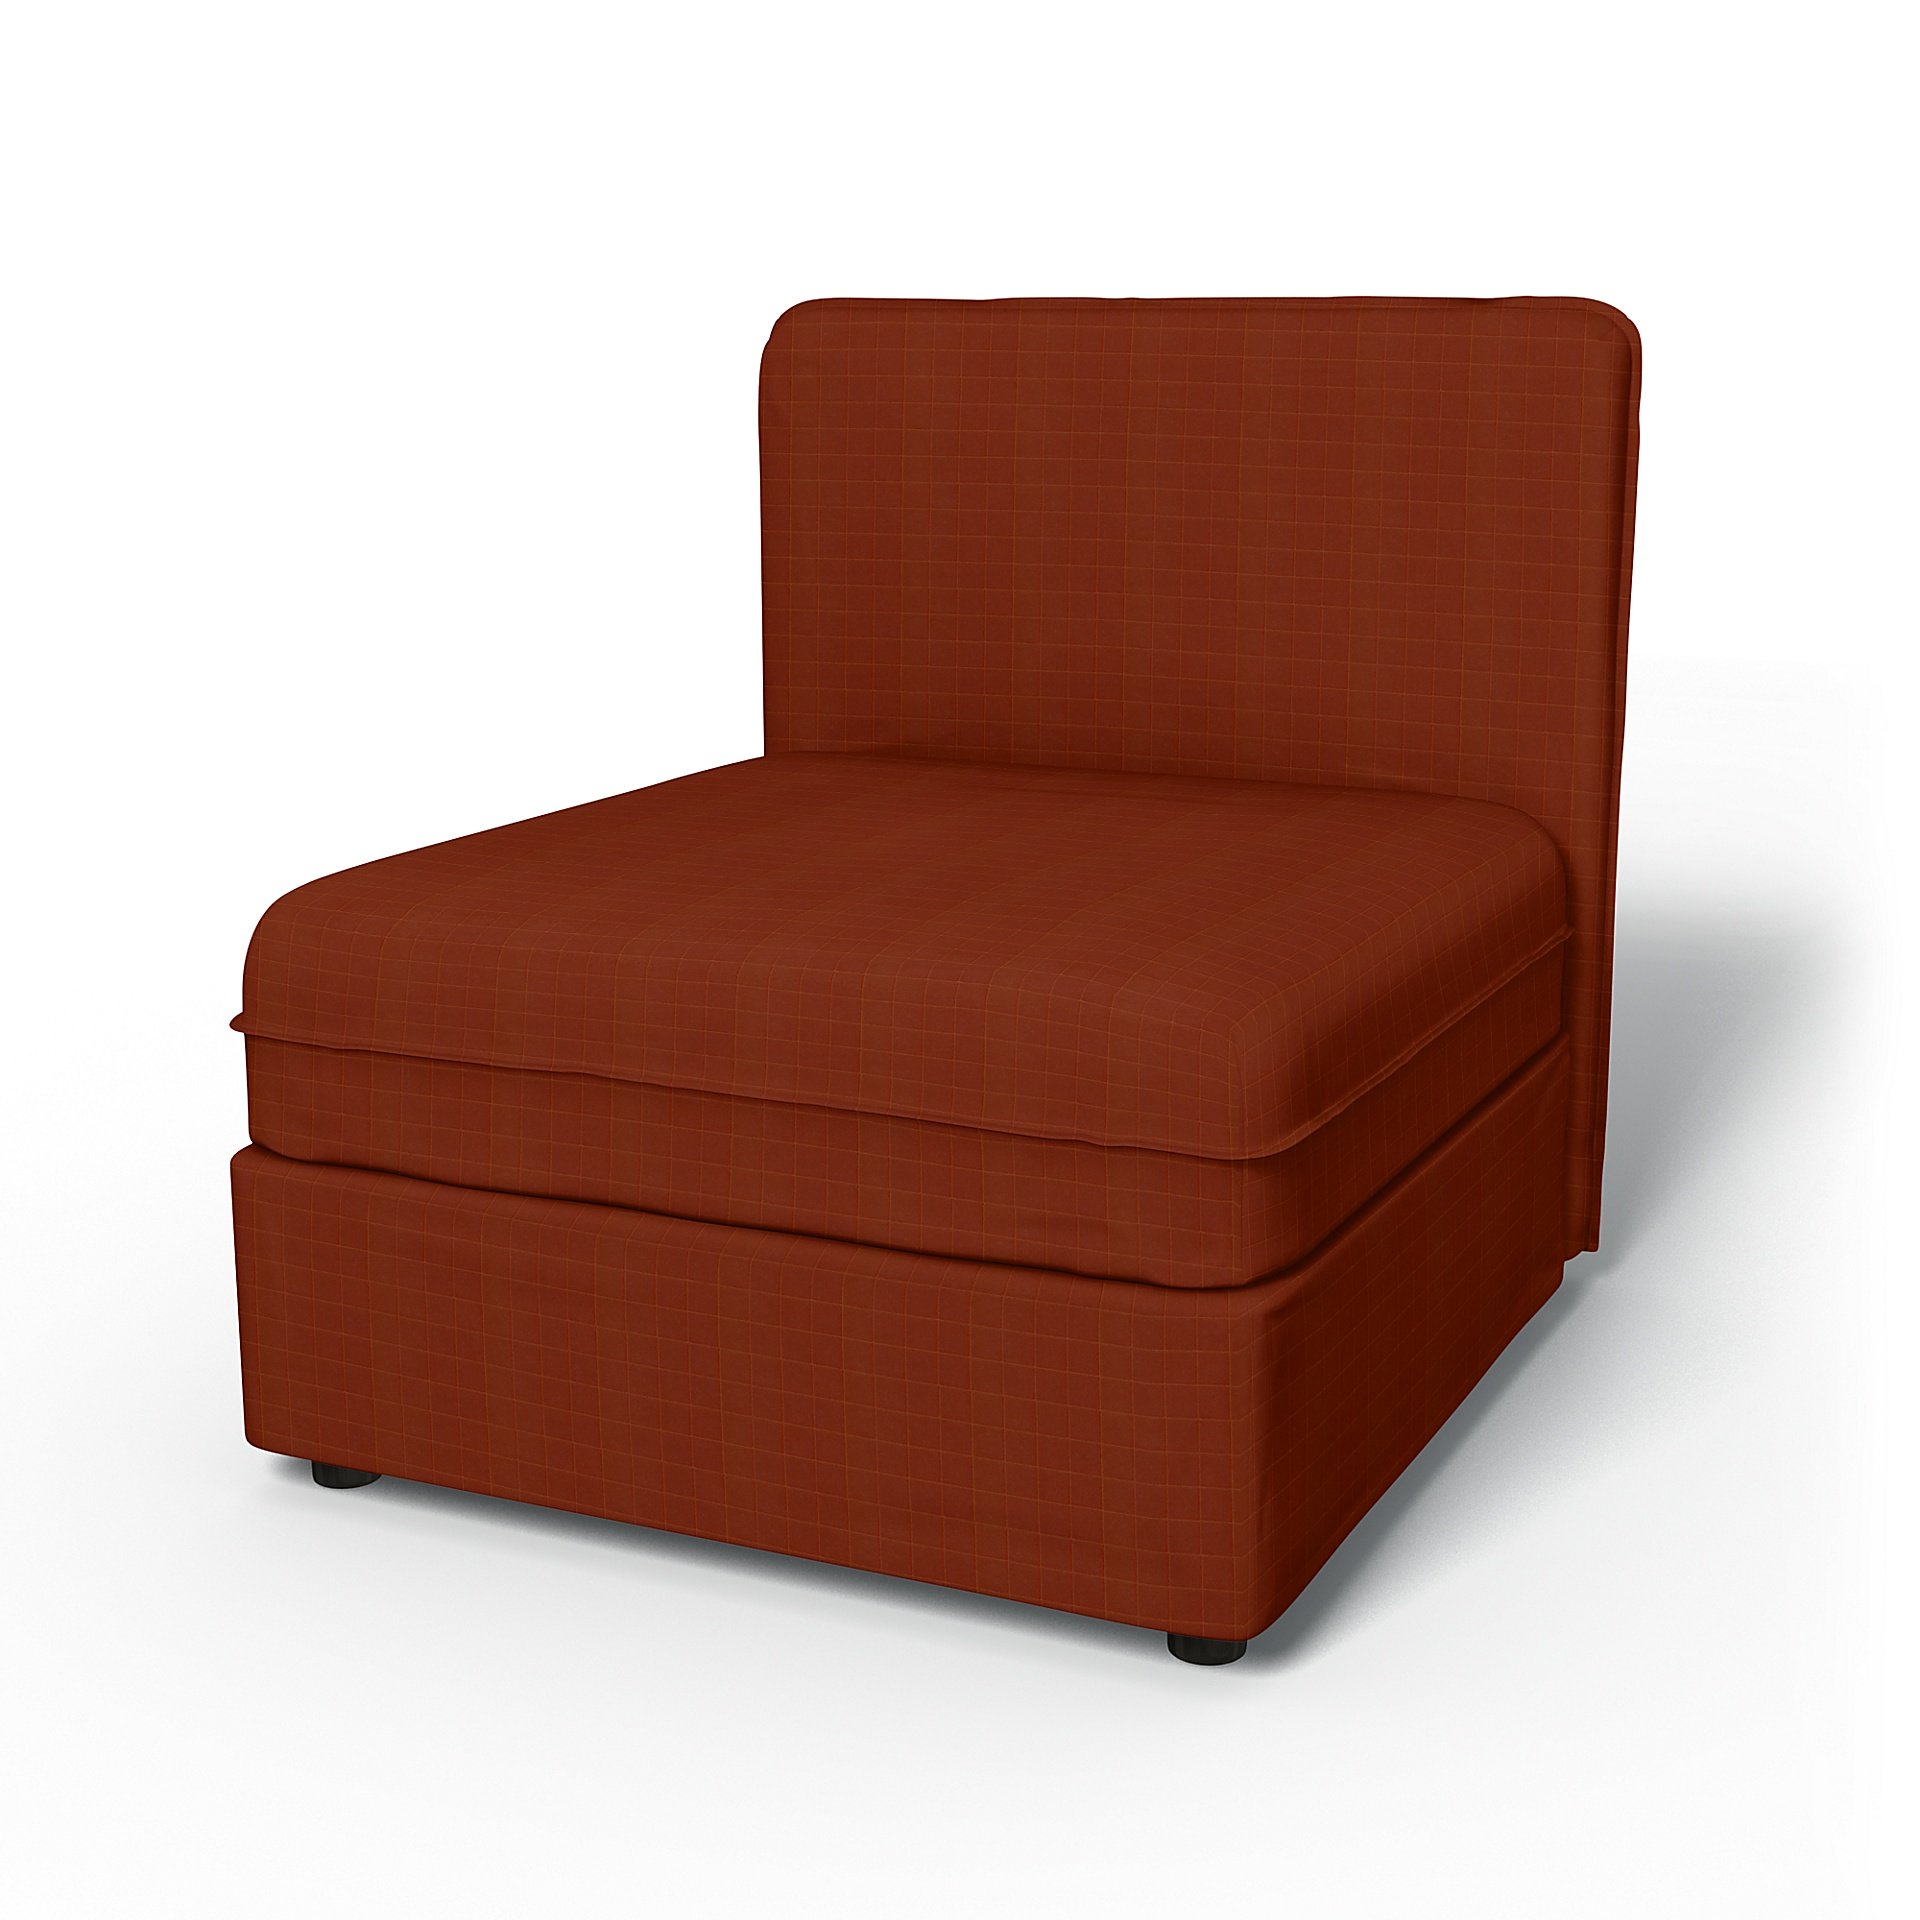 IKEA - Vallentuna Seat Module with Low Back Cover 80x80cm 32x32in, Burnt Sienna, Velvet - Bemz